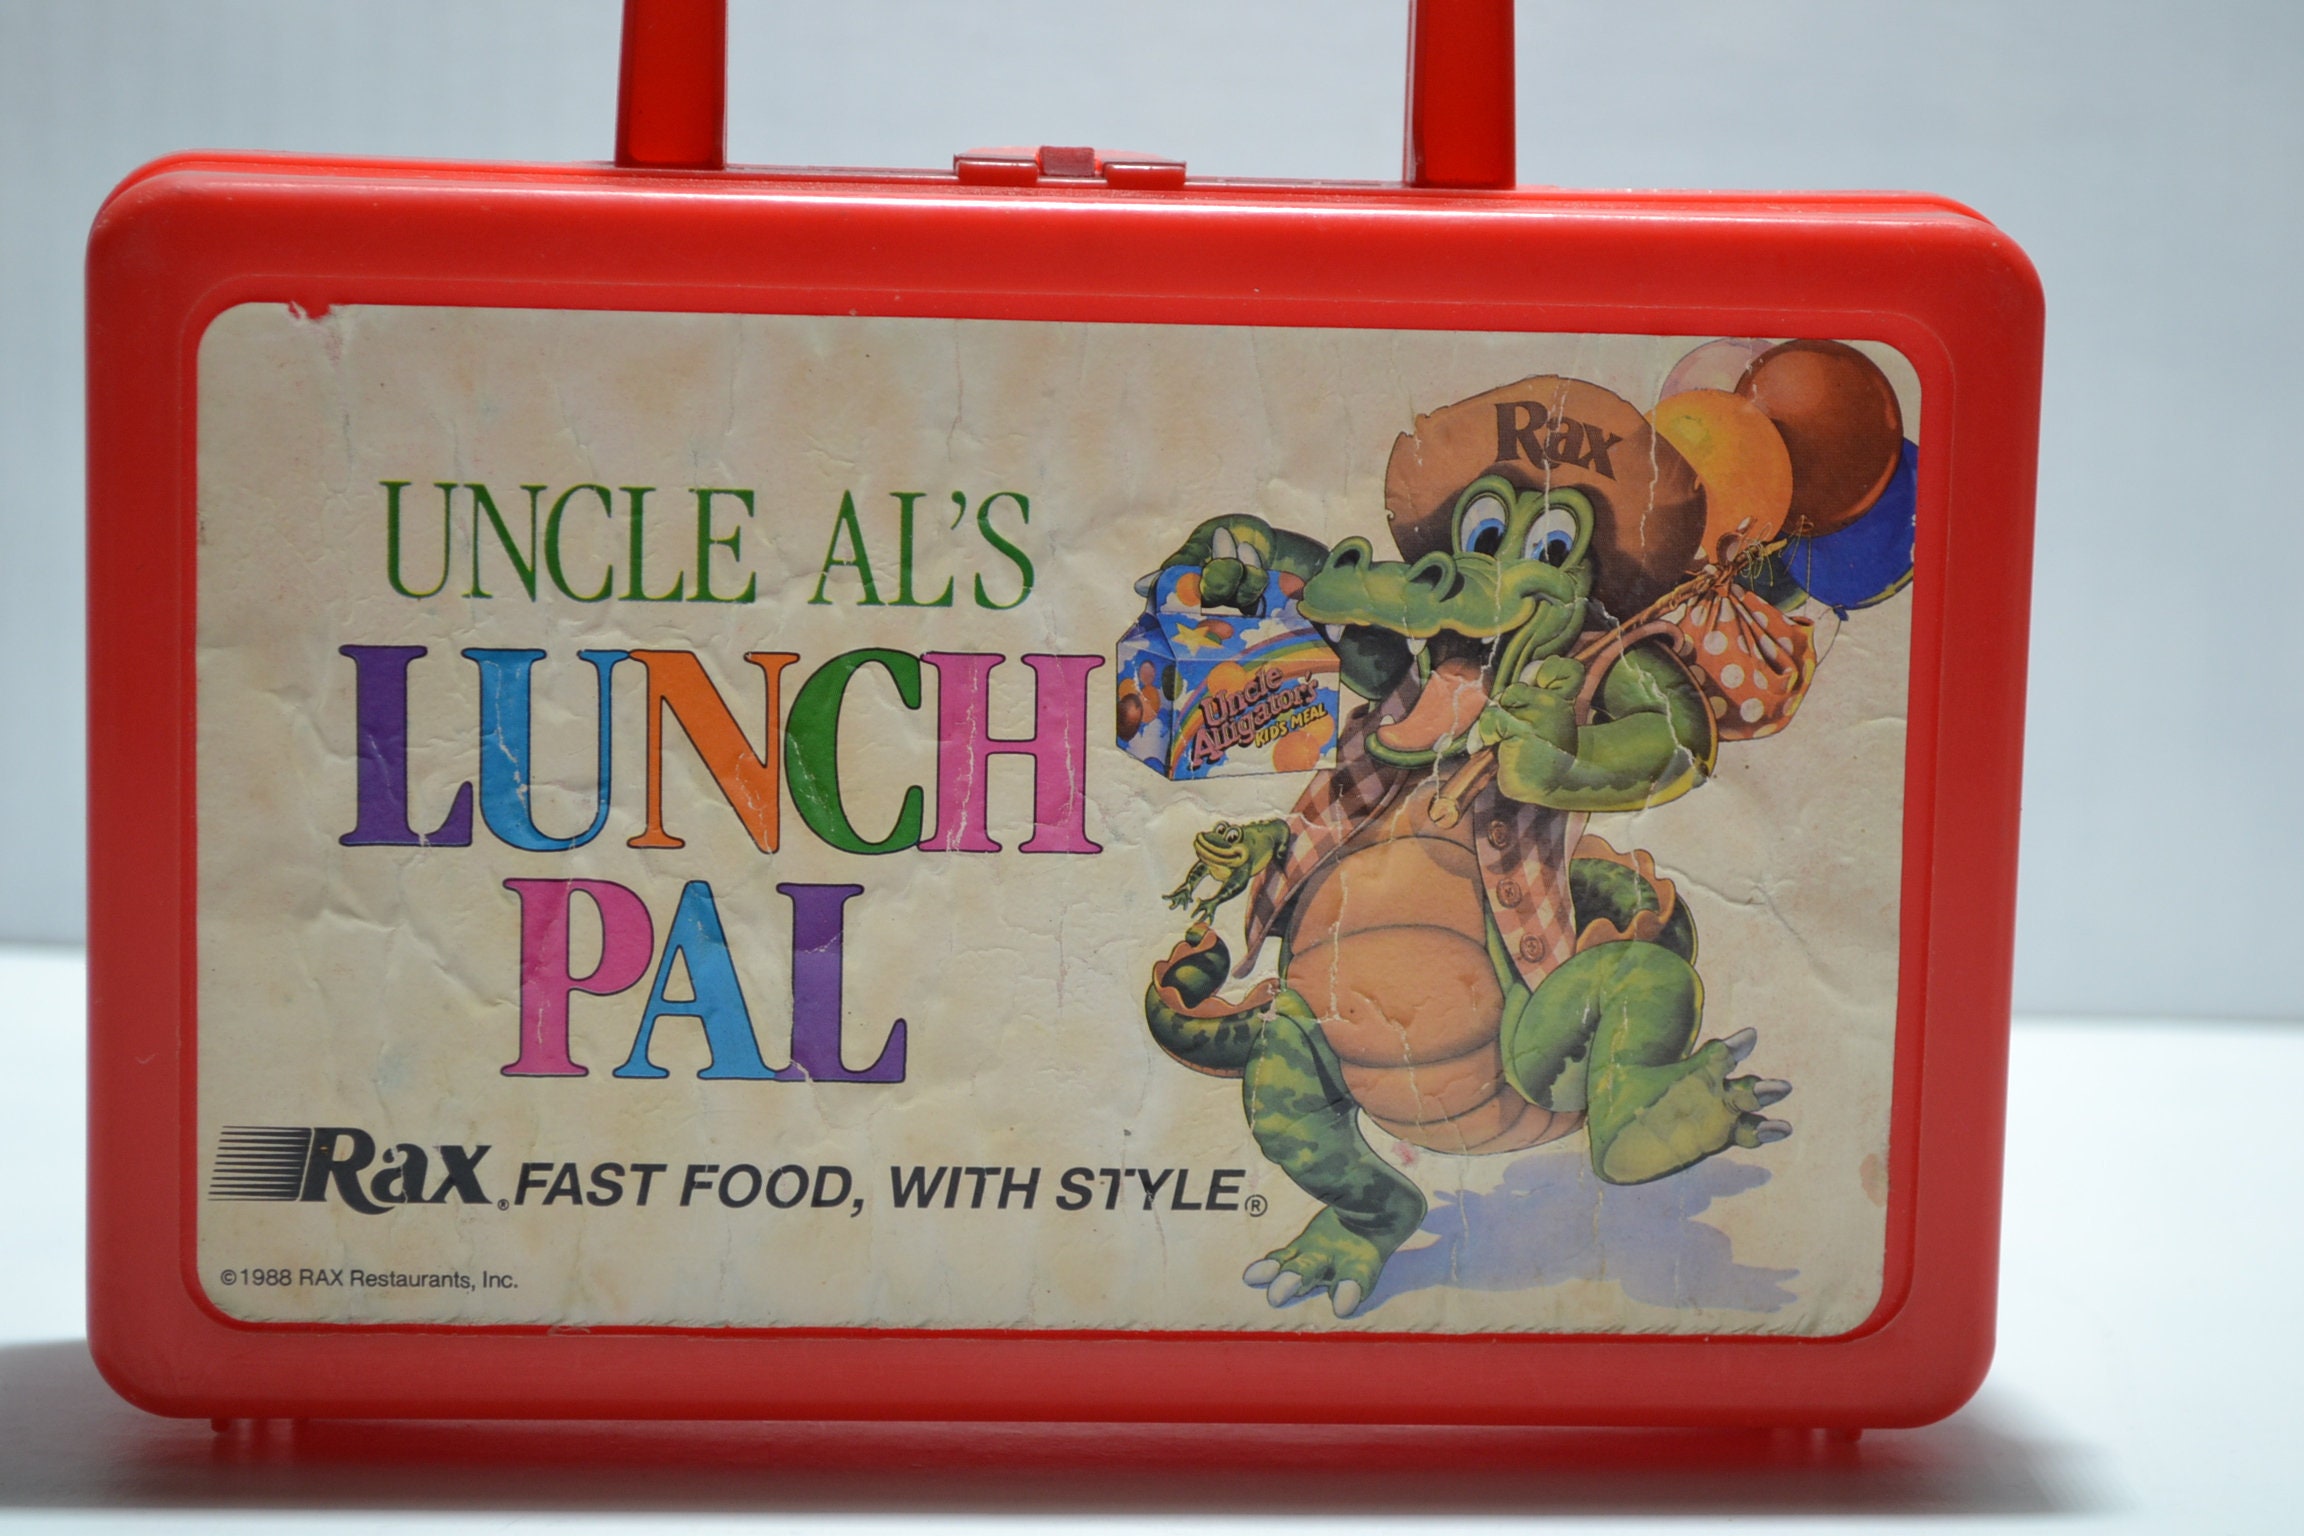 Alligator BAGGIES 80 Sandwich Bags BOX - Vintage Advertising Character